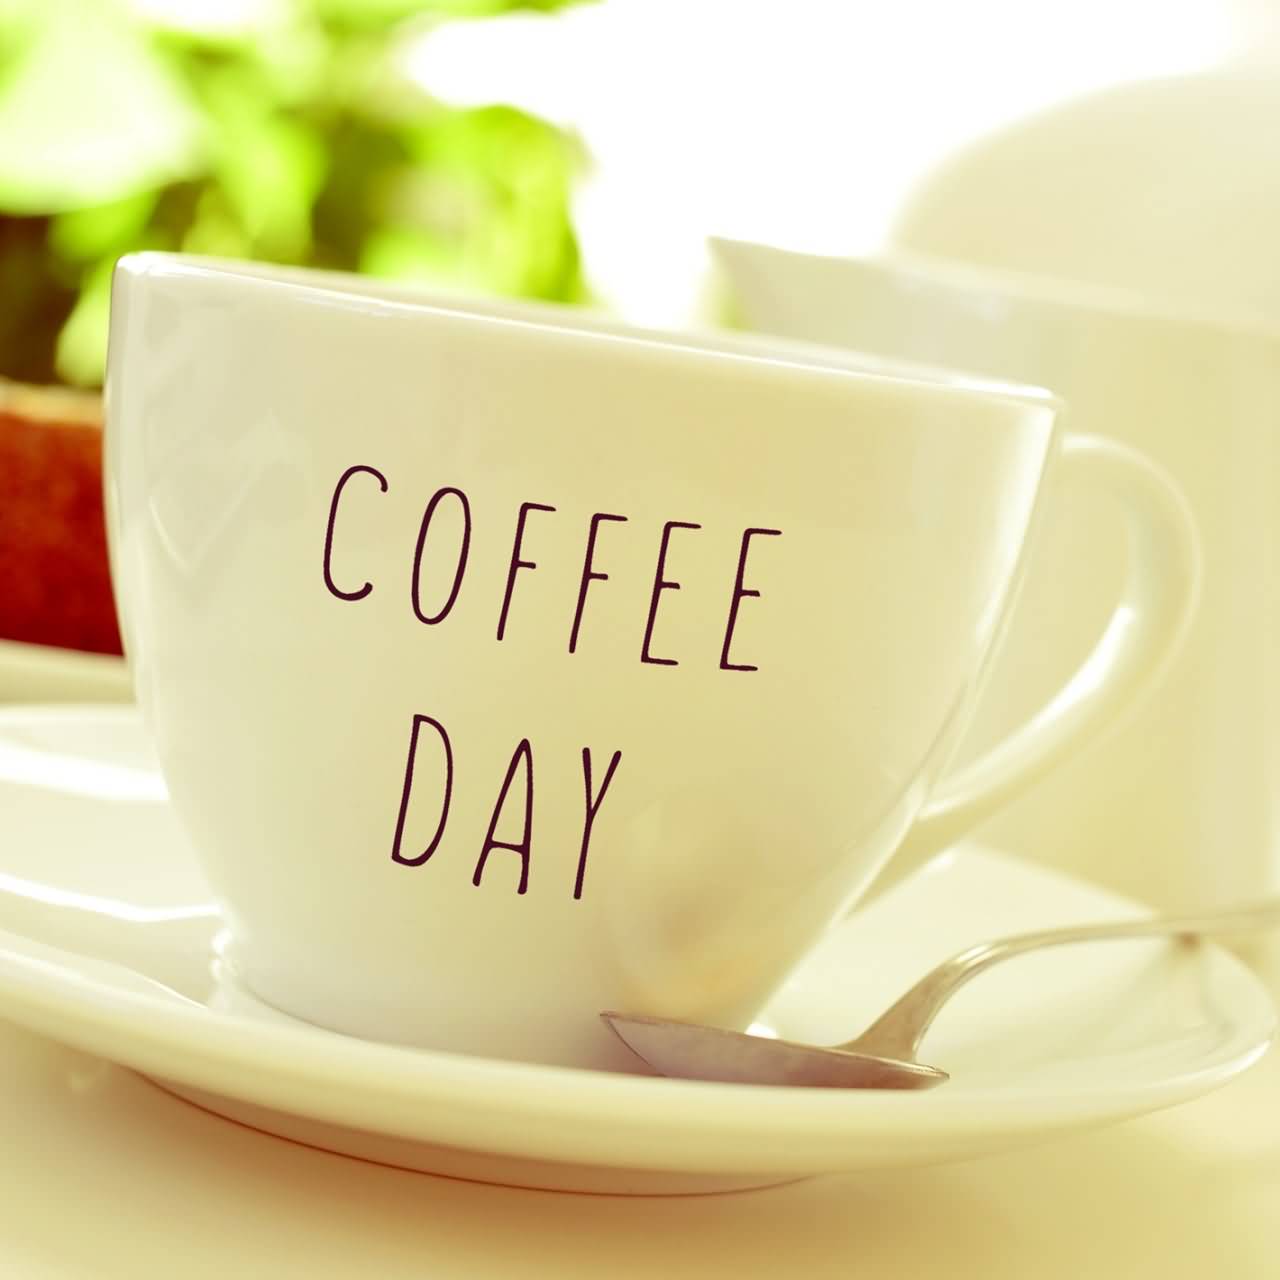 Best International Coffee Day Greeting Image On Askideas